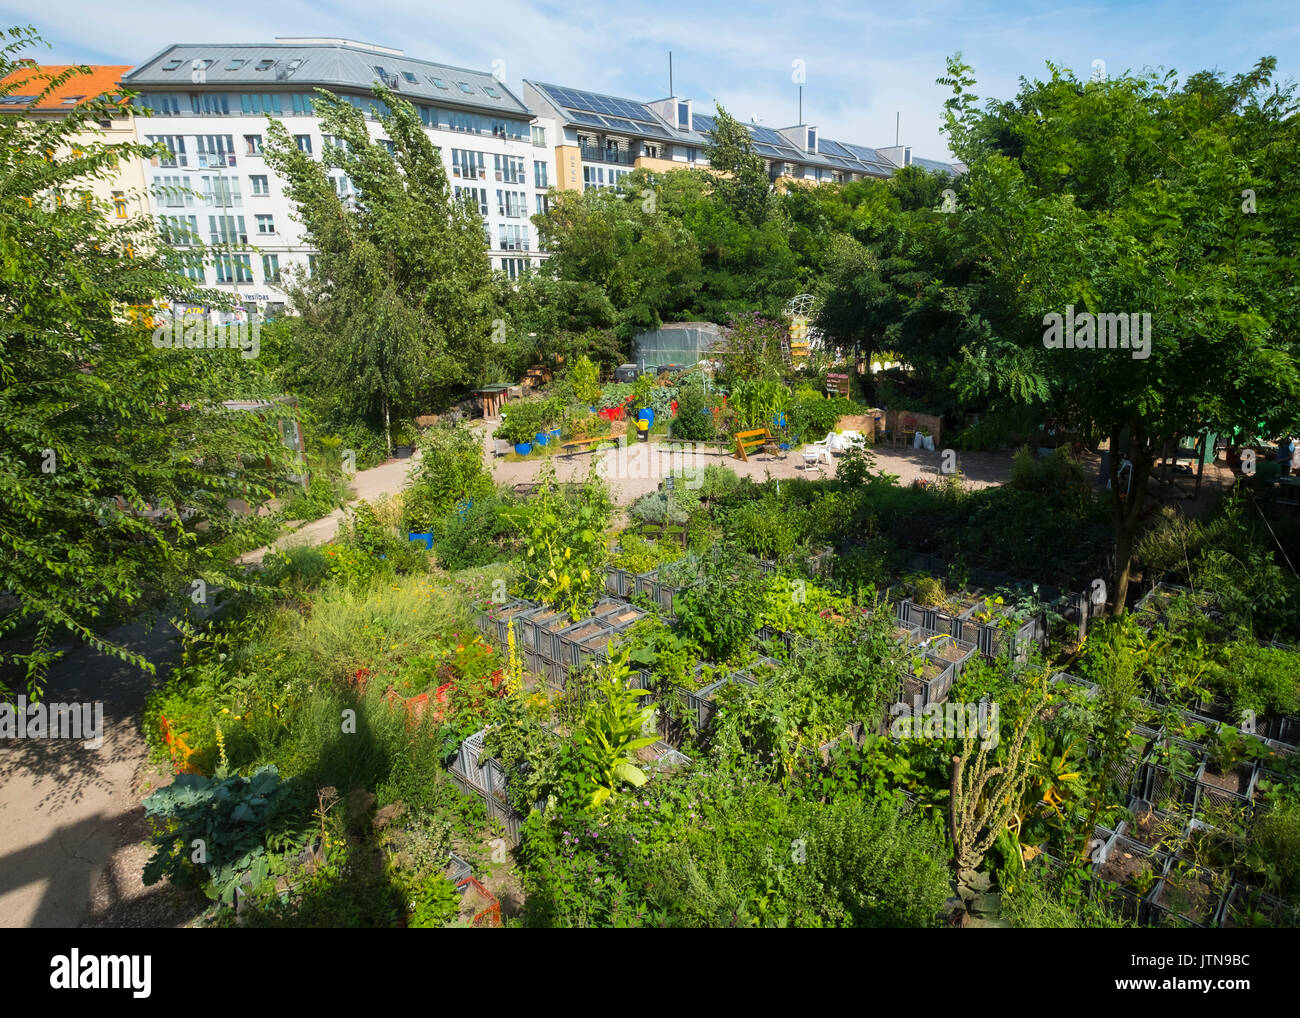 view across urban city community garden called Prinzessinnengarten in Kreuzberg, Berlin, Germany. Stock Photo